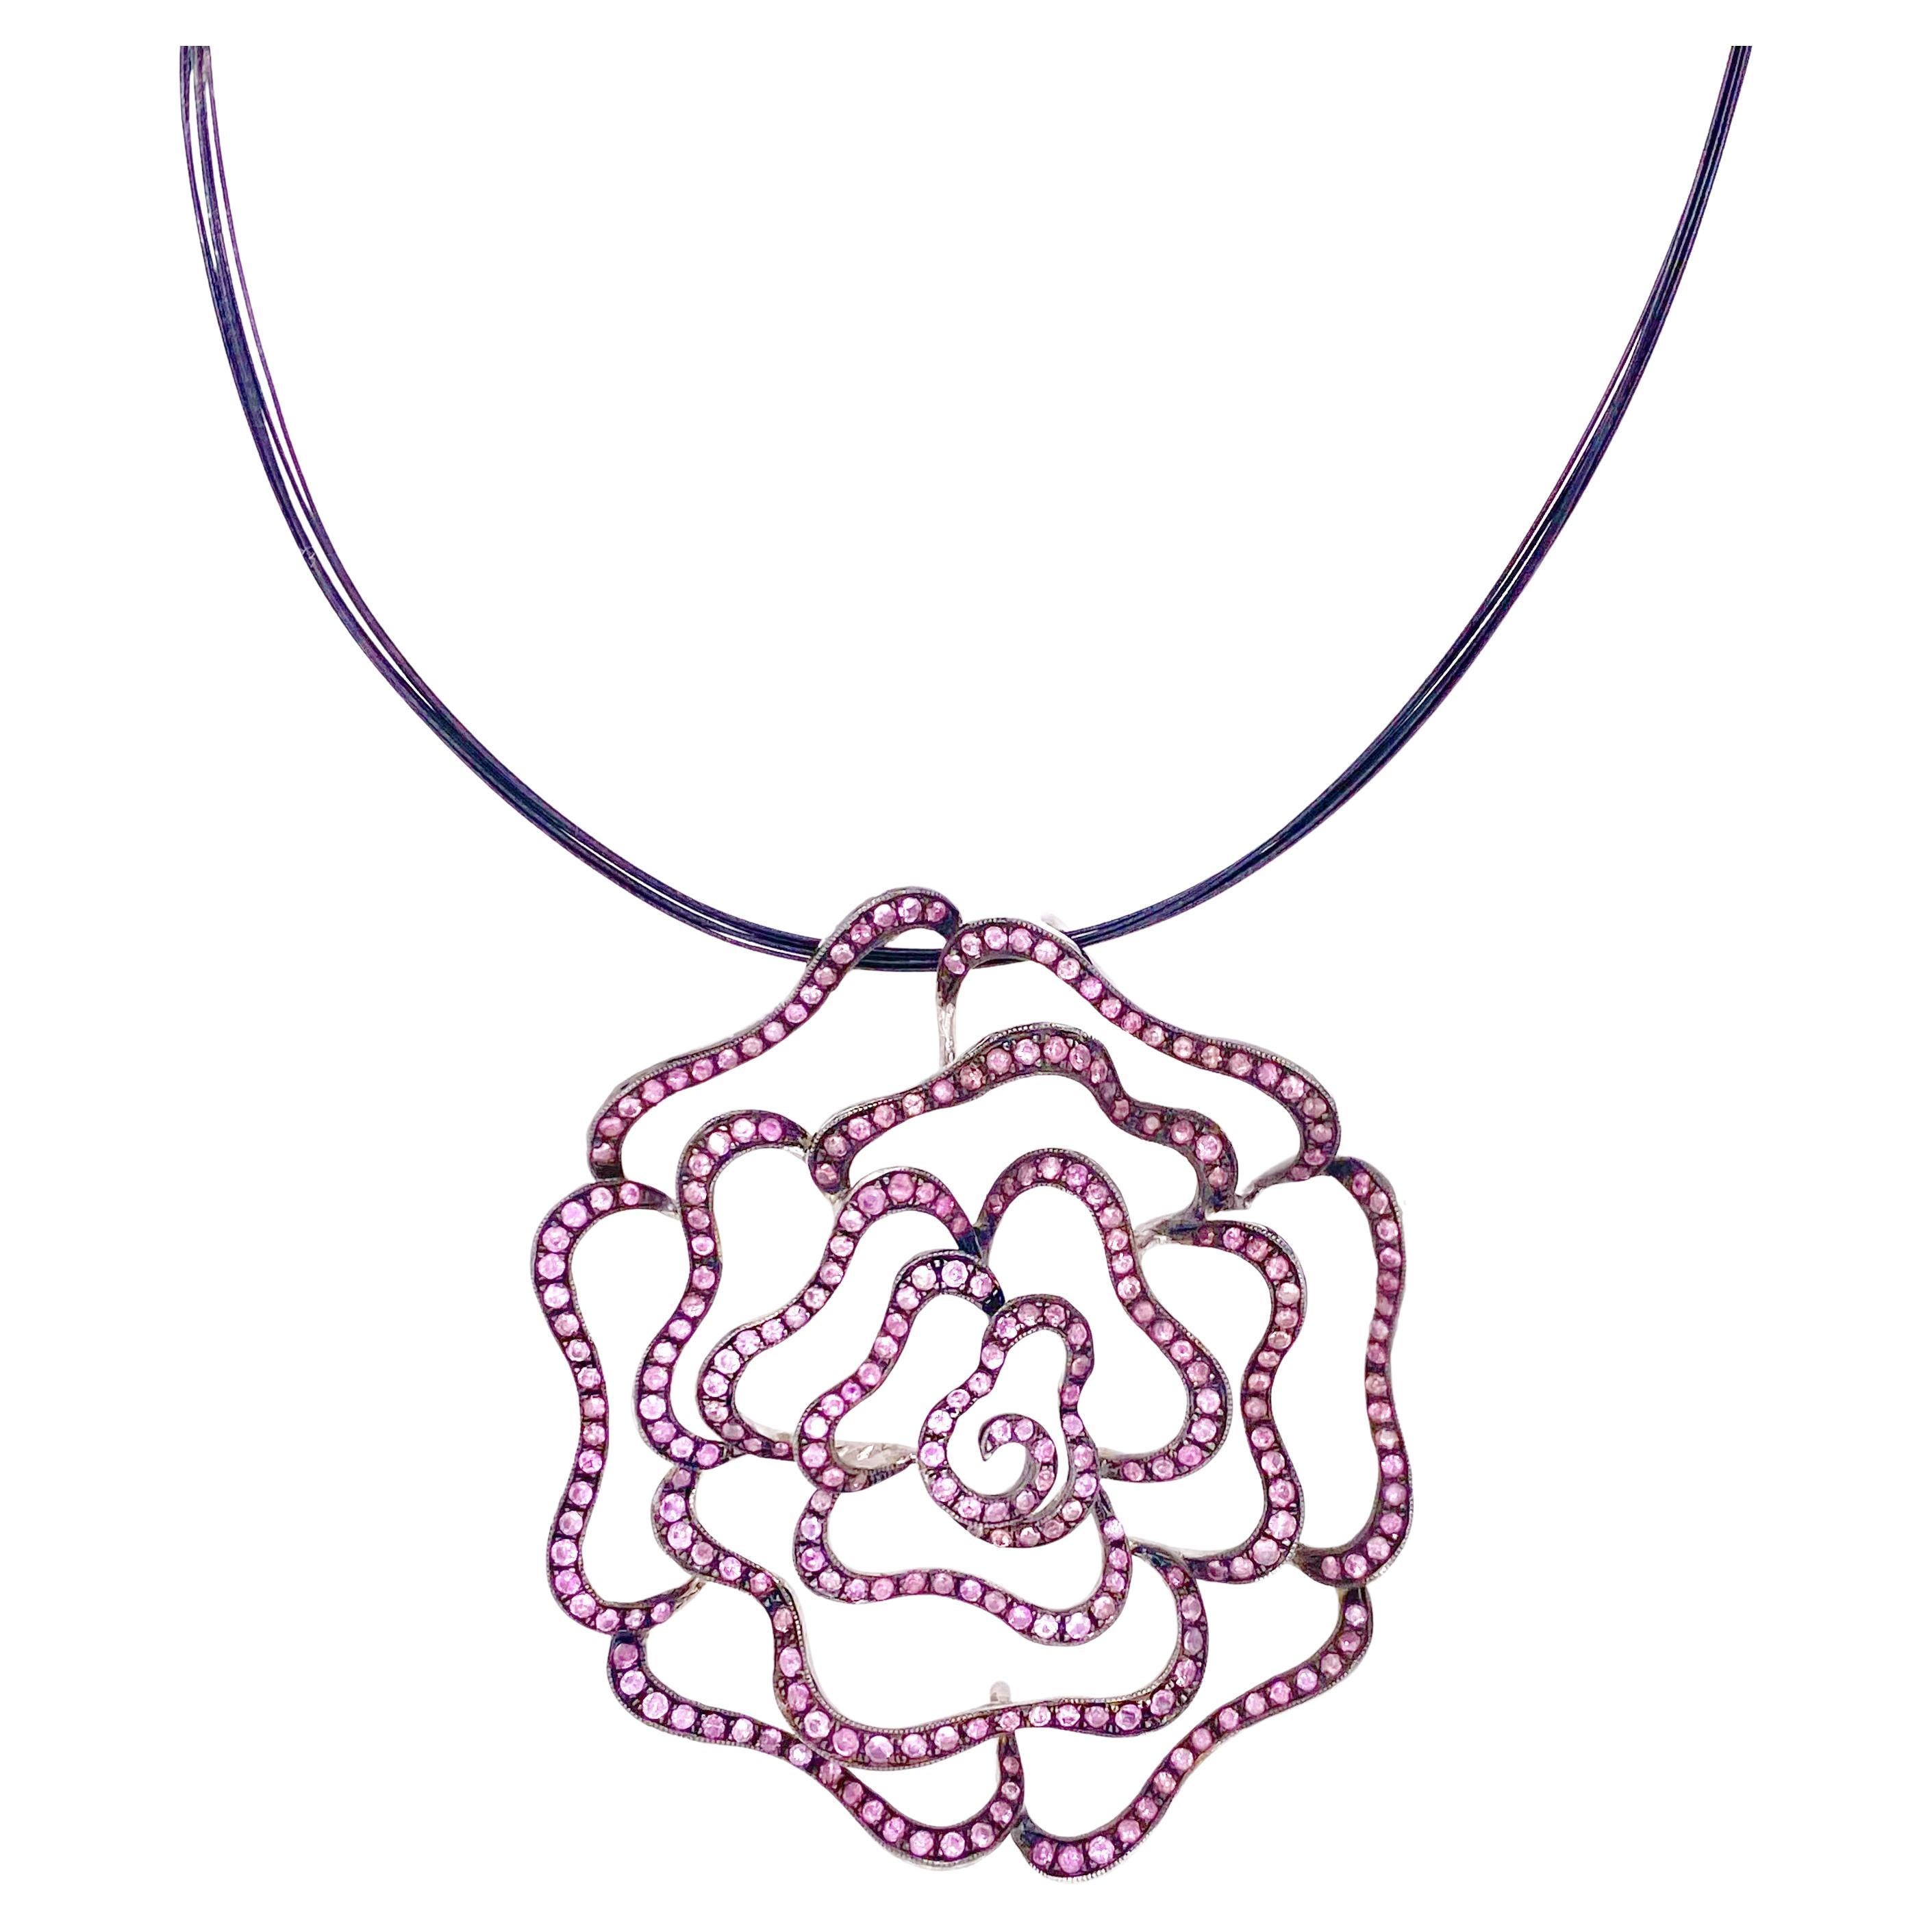 Pink Sapphire Rose Necklace Blackened w 275 Gemstones 4.13 Carats Pk Sapphires